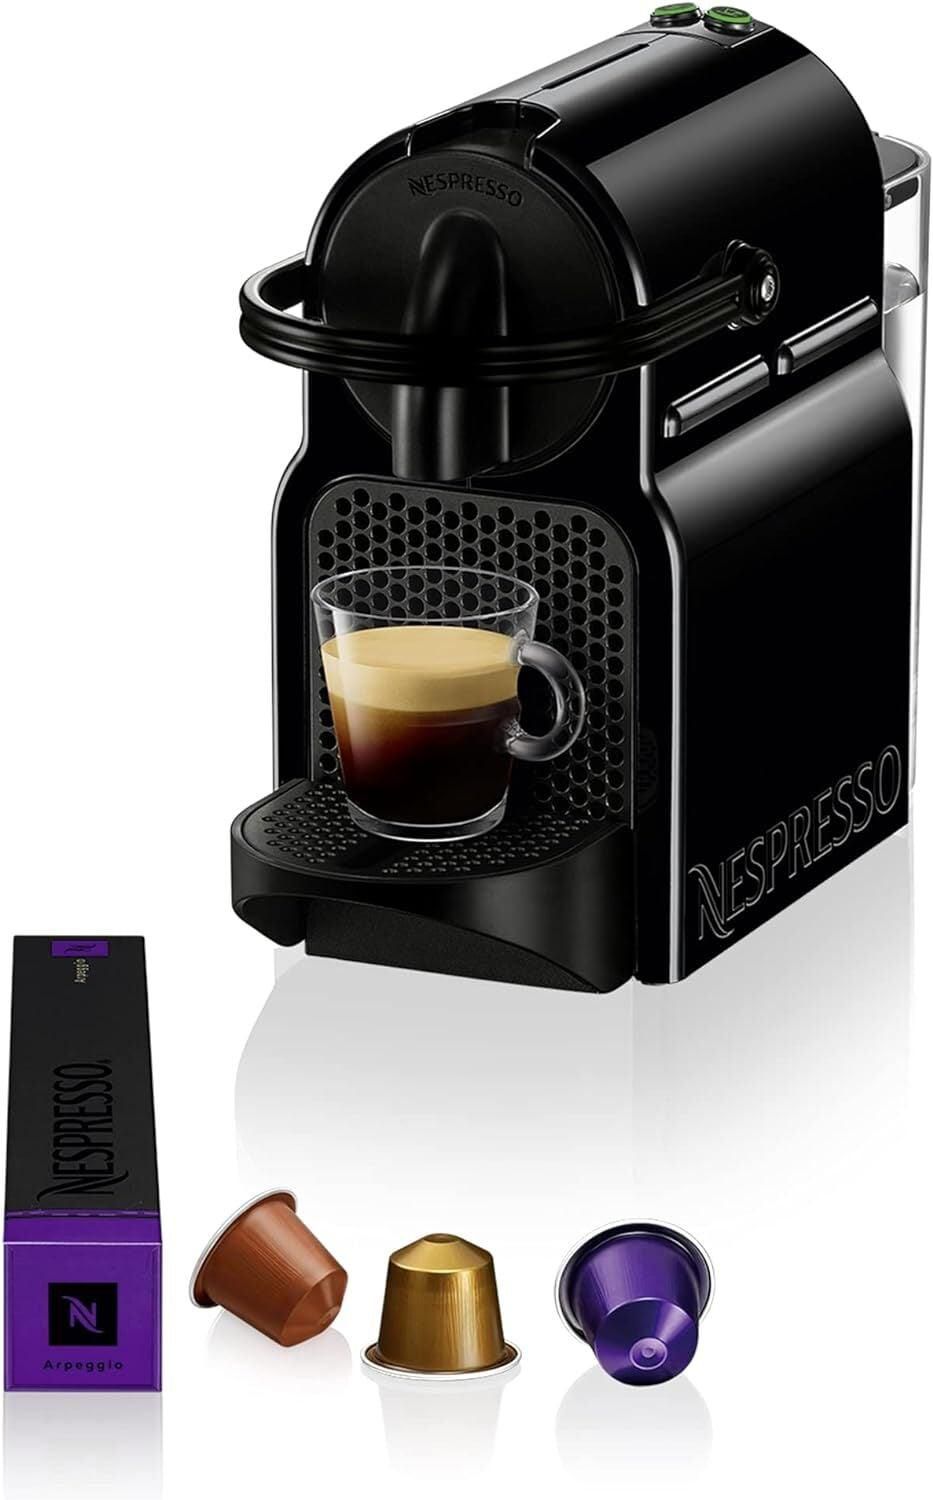 Nespresso Inissia Black Coffee Machine